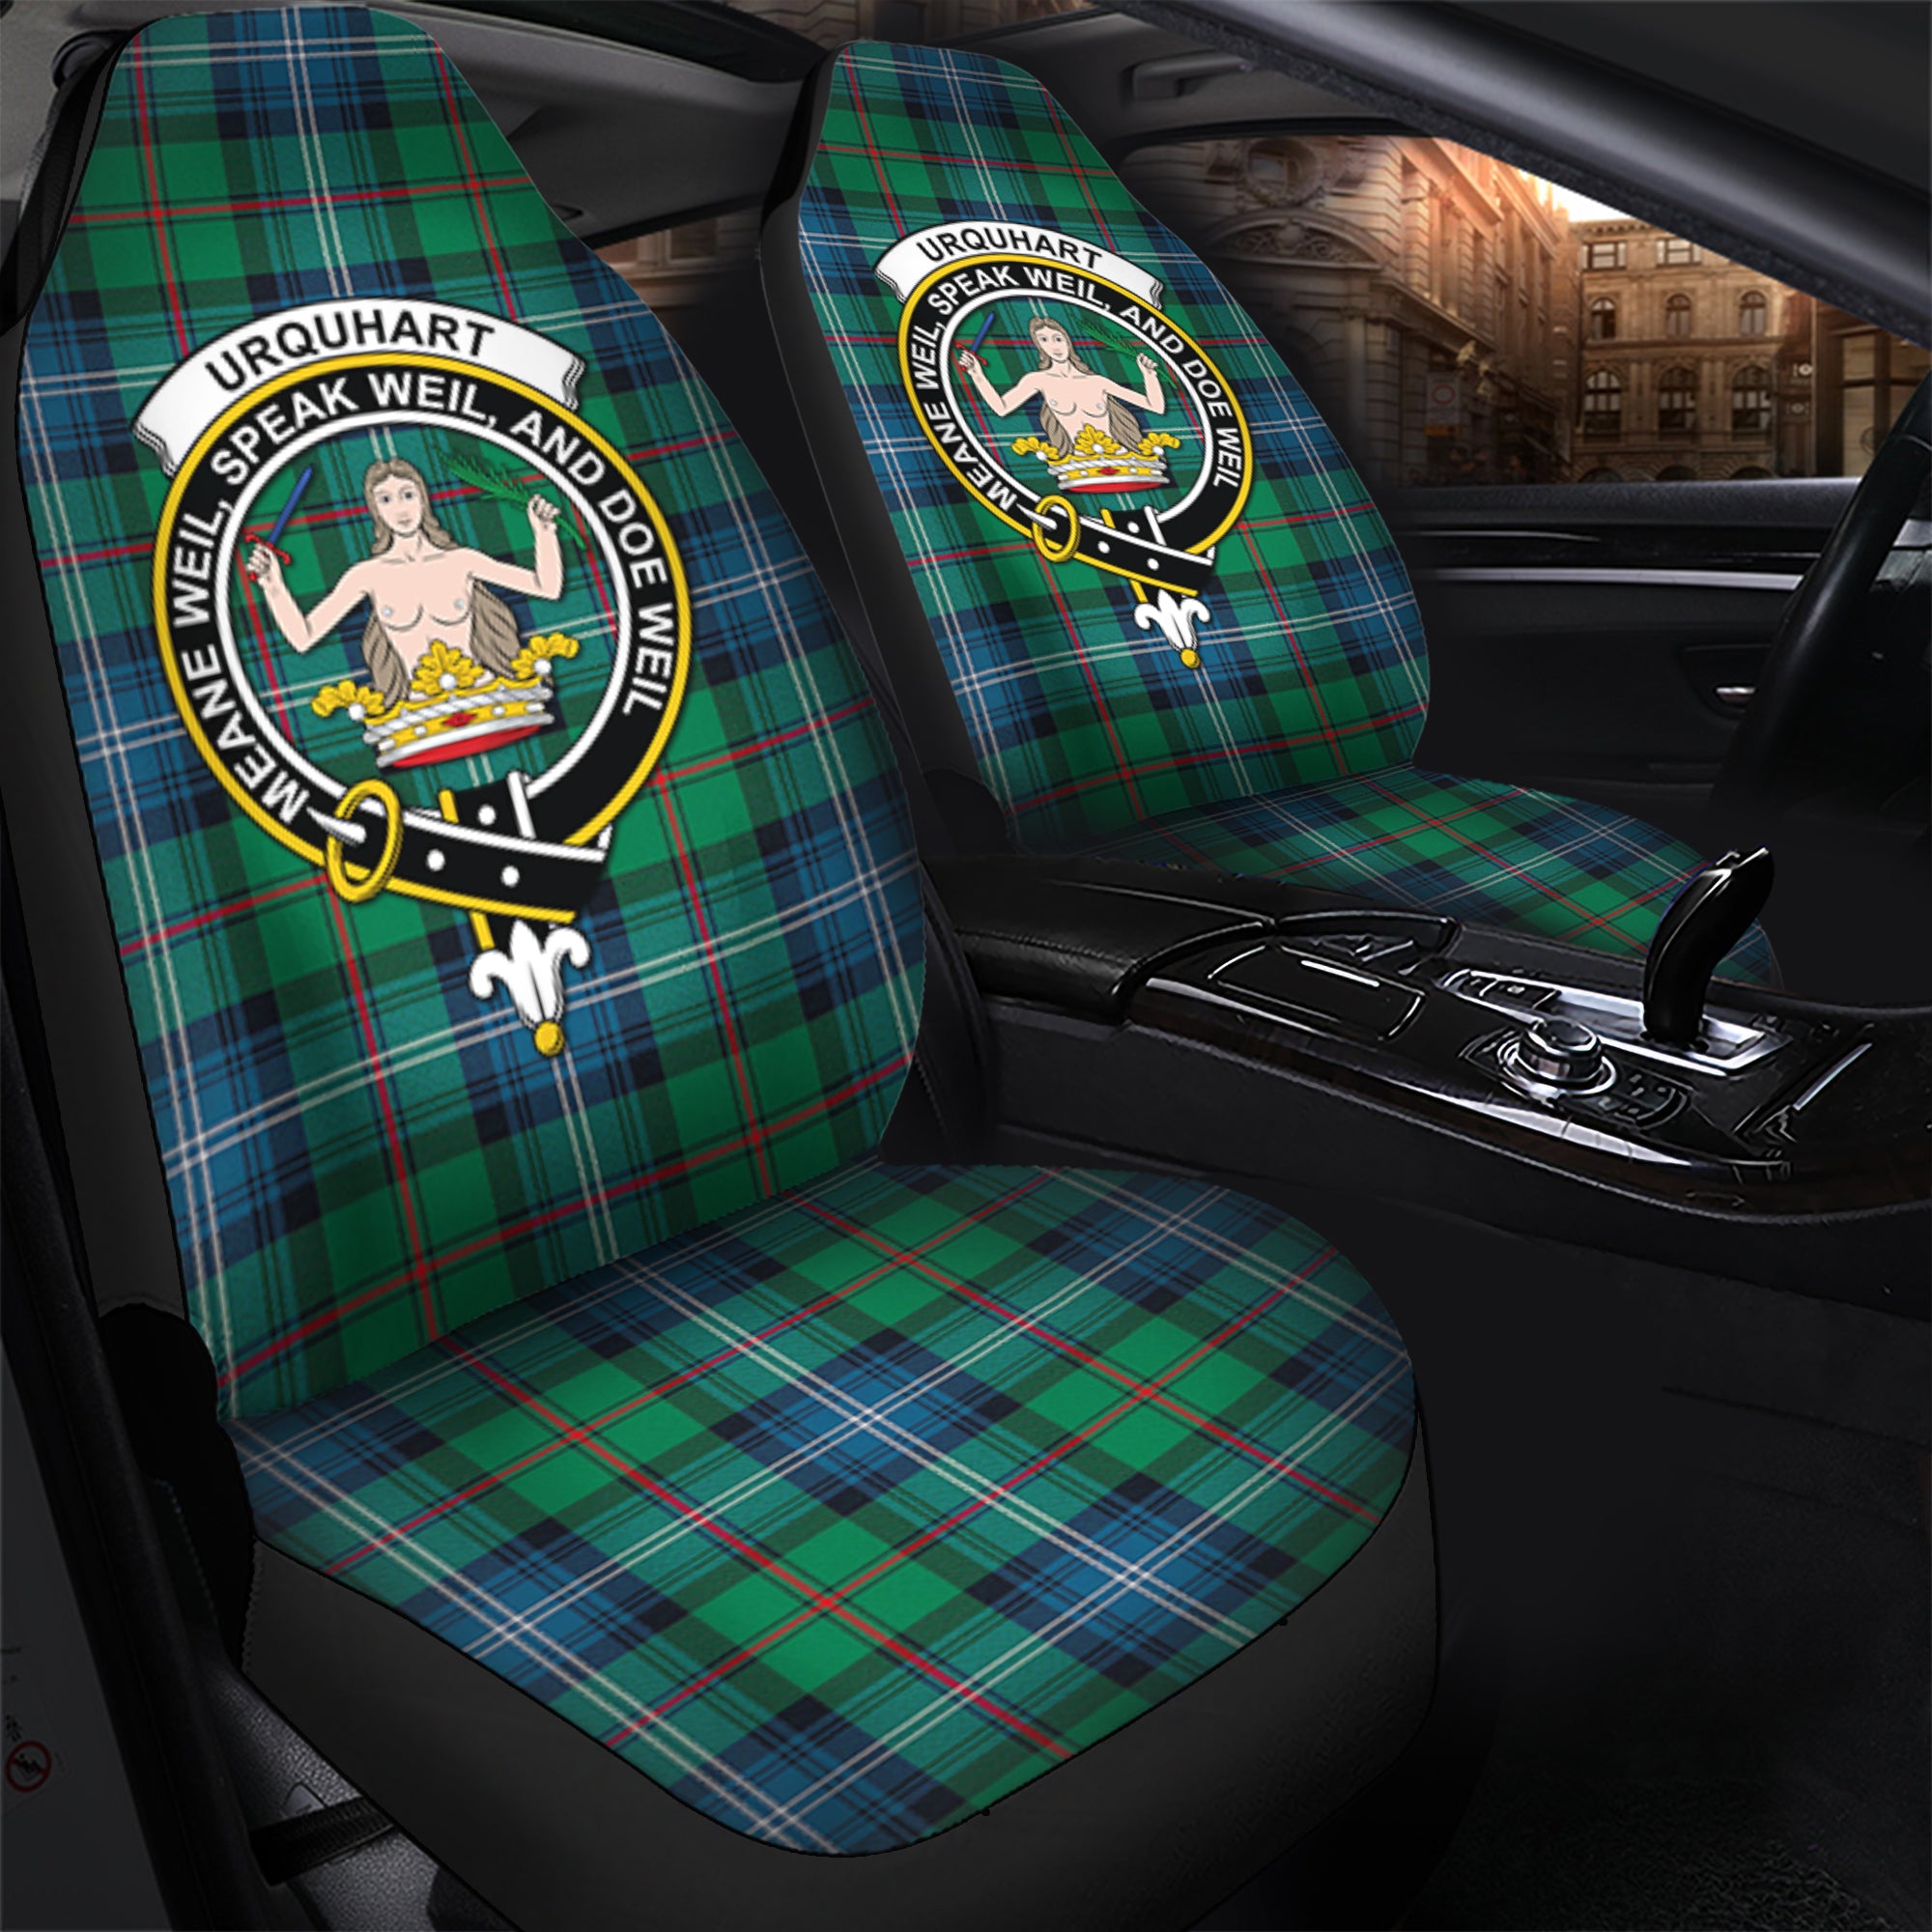 Urquhart Ancient Clan Tartan Car Seat Cover, Family Crest Tartan Seat Cover TS23